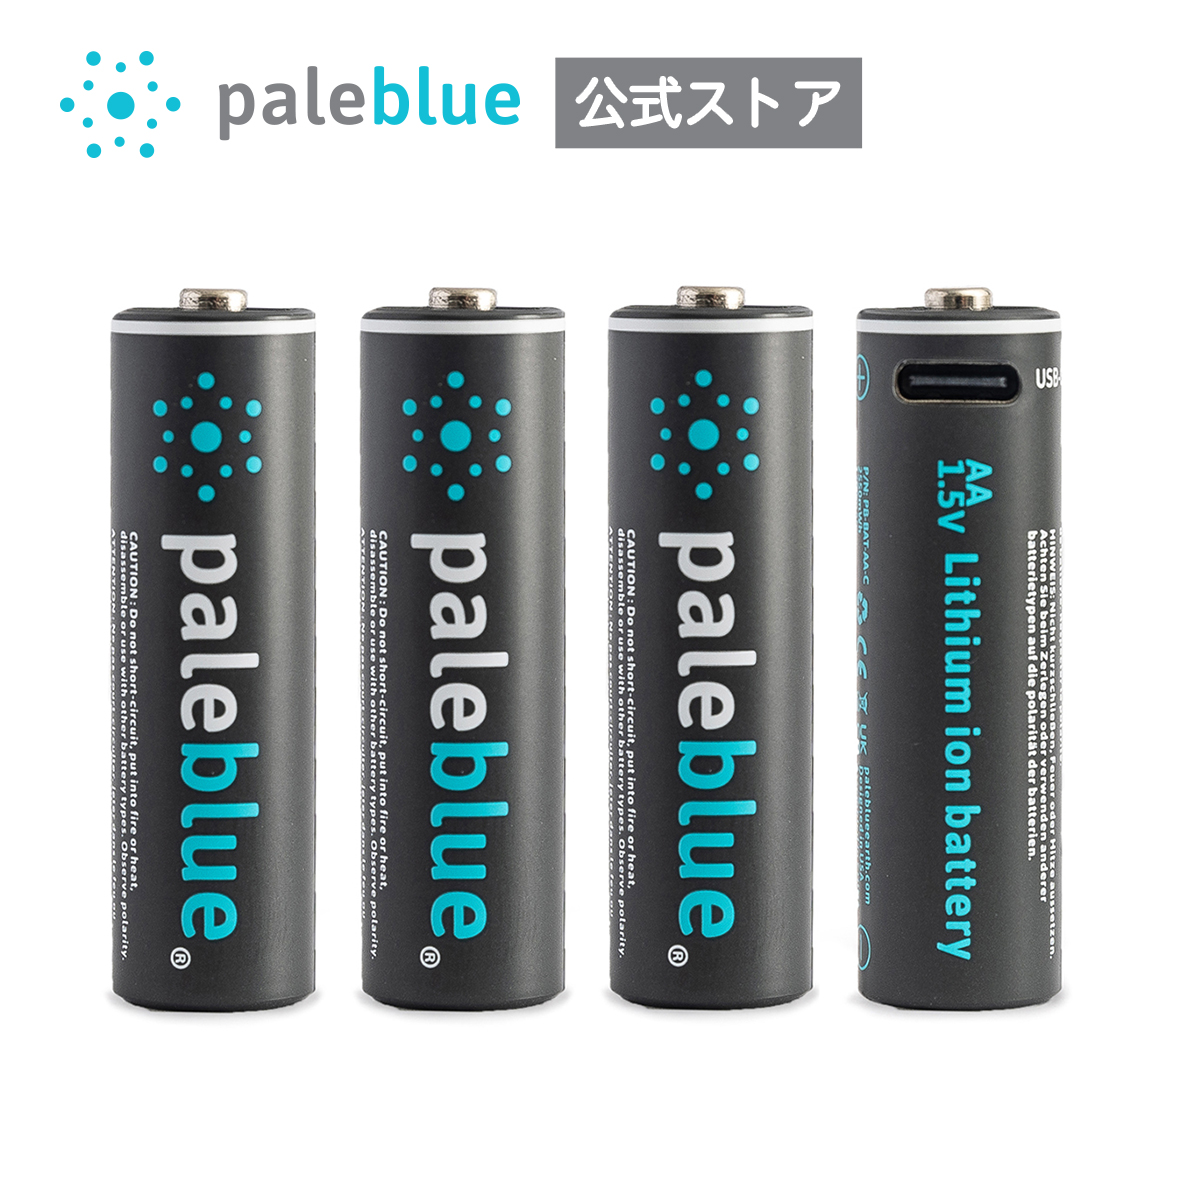 Pale Blue 公式 単3形 USBスマート充電池 4本セット USB-C モデル リチウムイオン 充電池 1.5V電圧  USB充電 1000回使用可能 急速充電 超軽量 1700mAh USB-Cケーブル付き